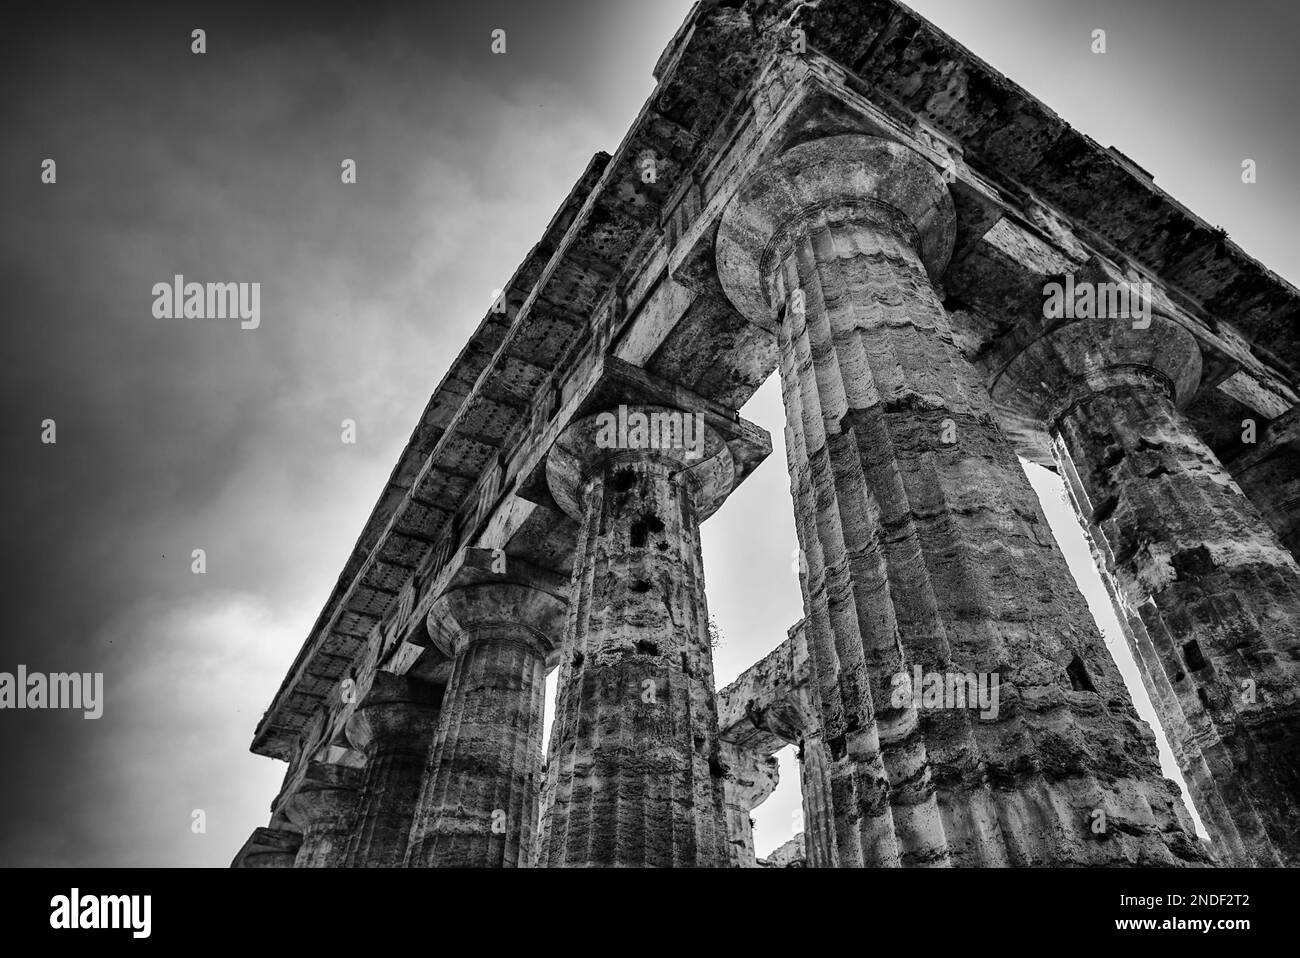 Second Temple of Hera in Paestum, Italy. Stock Photo